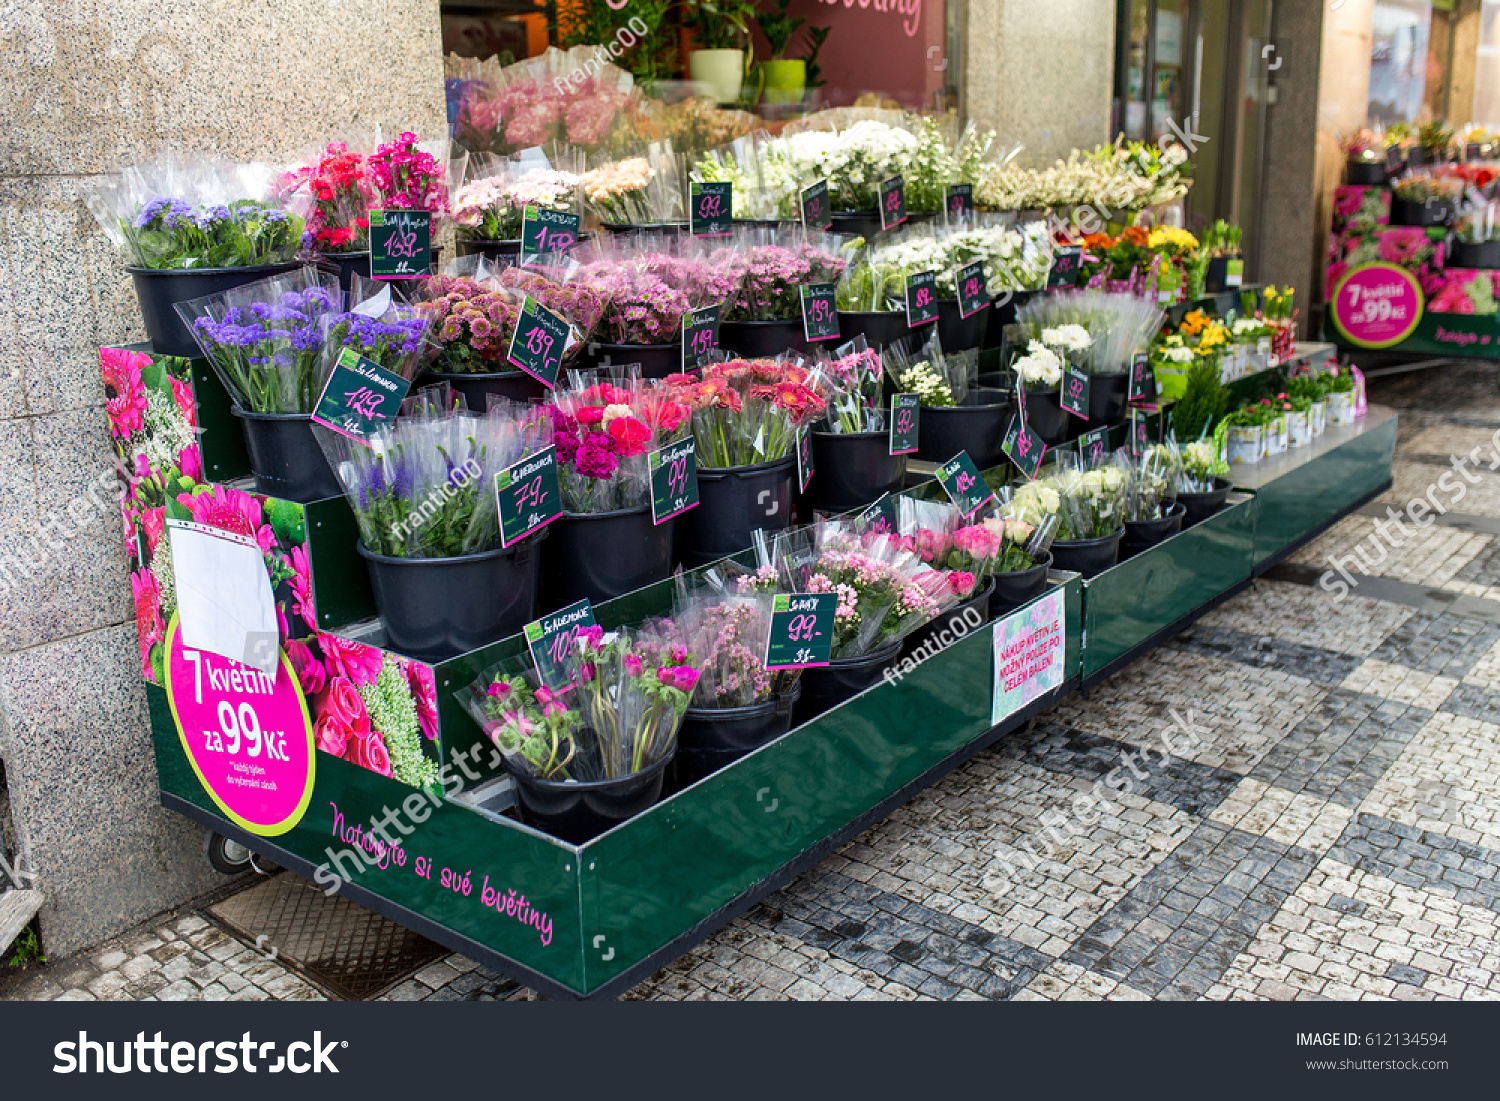 clara pochettino recommends czech streets flower shop pic